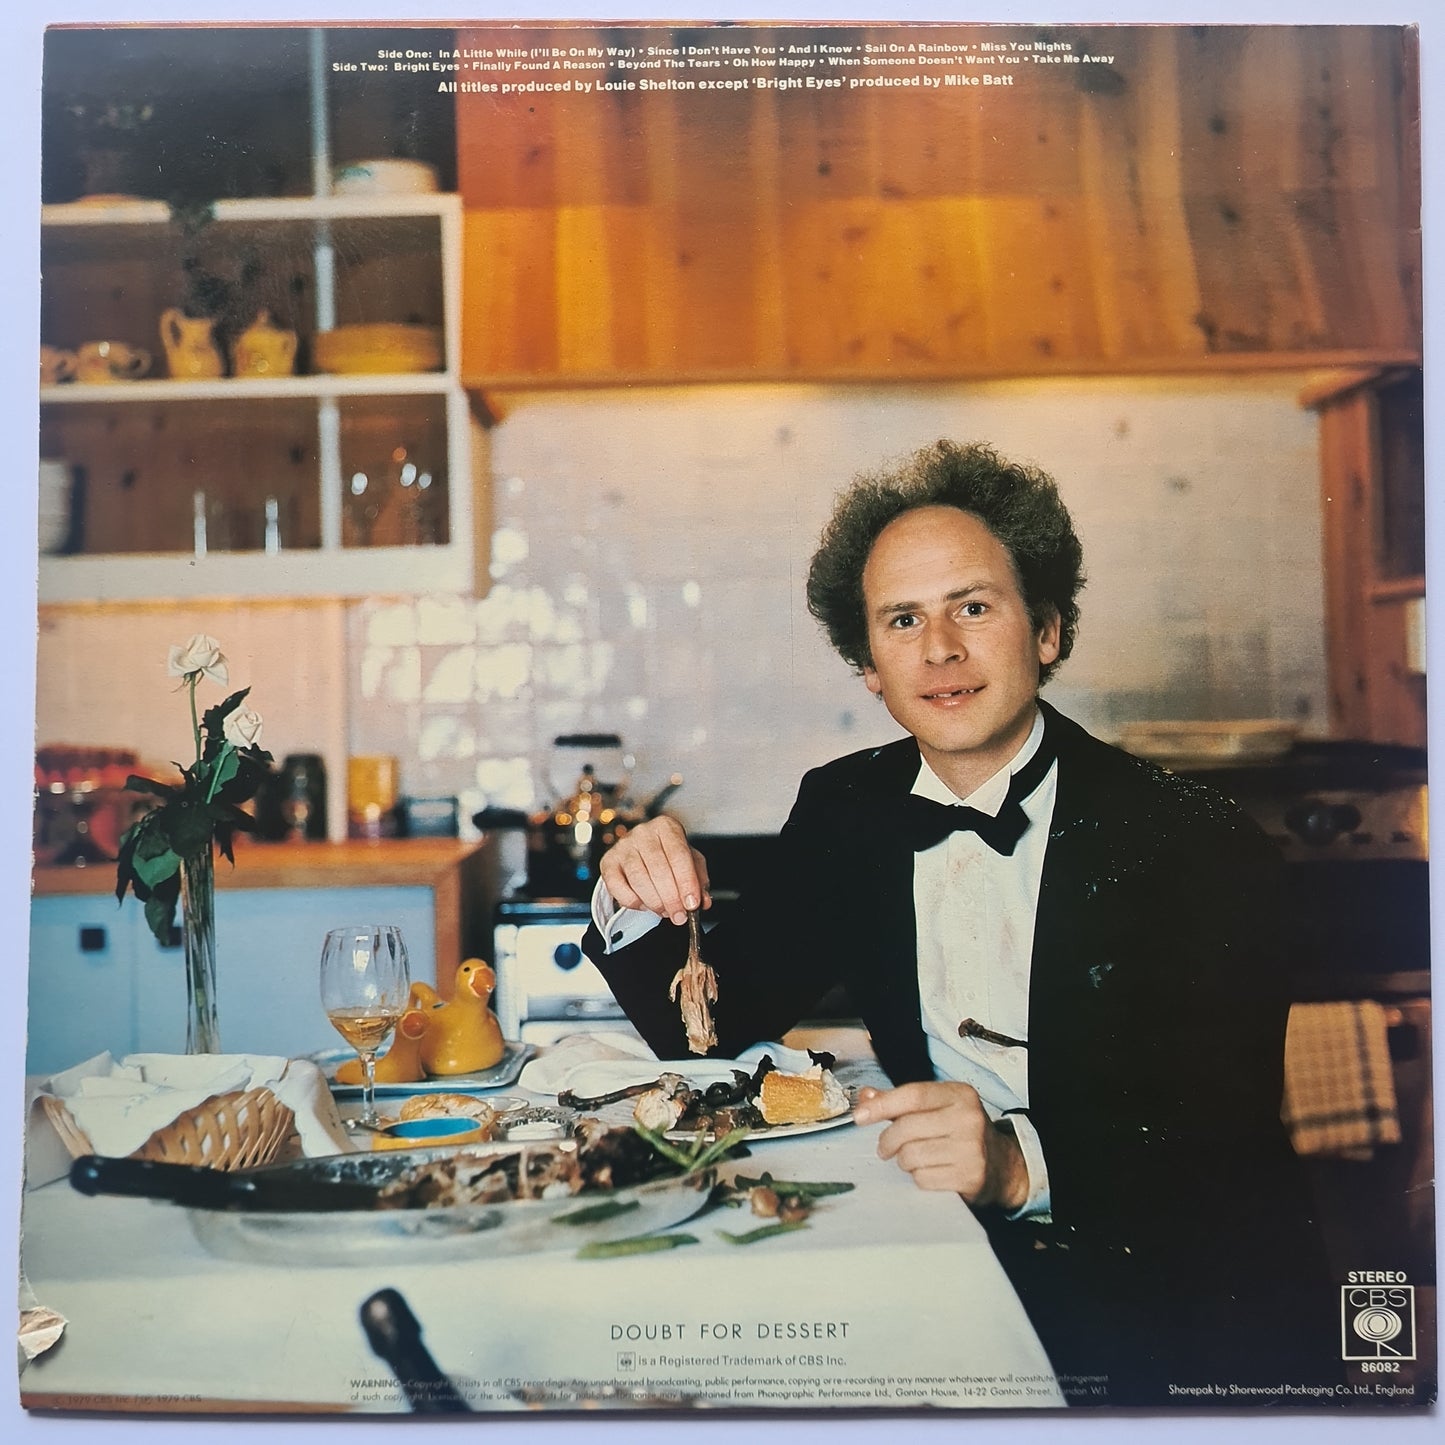 Art Garfunkel – Fate For Breakfast - 1979 - Vinyl Record